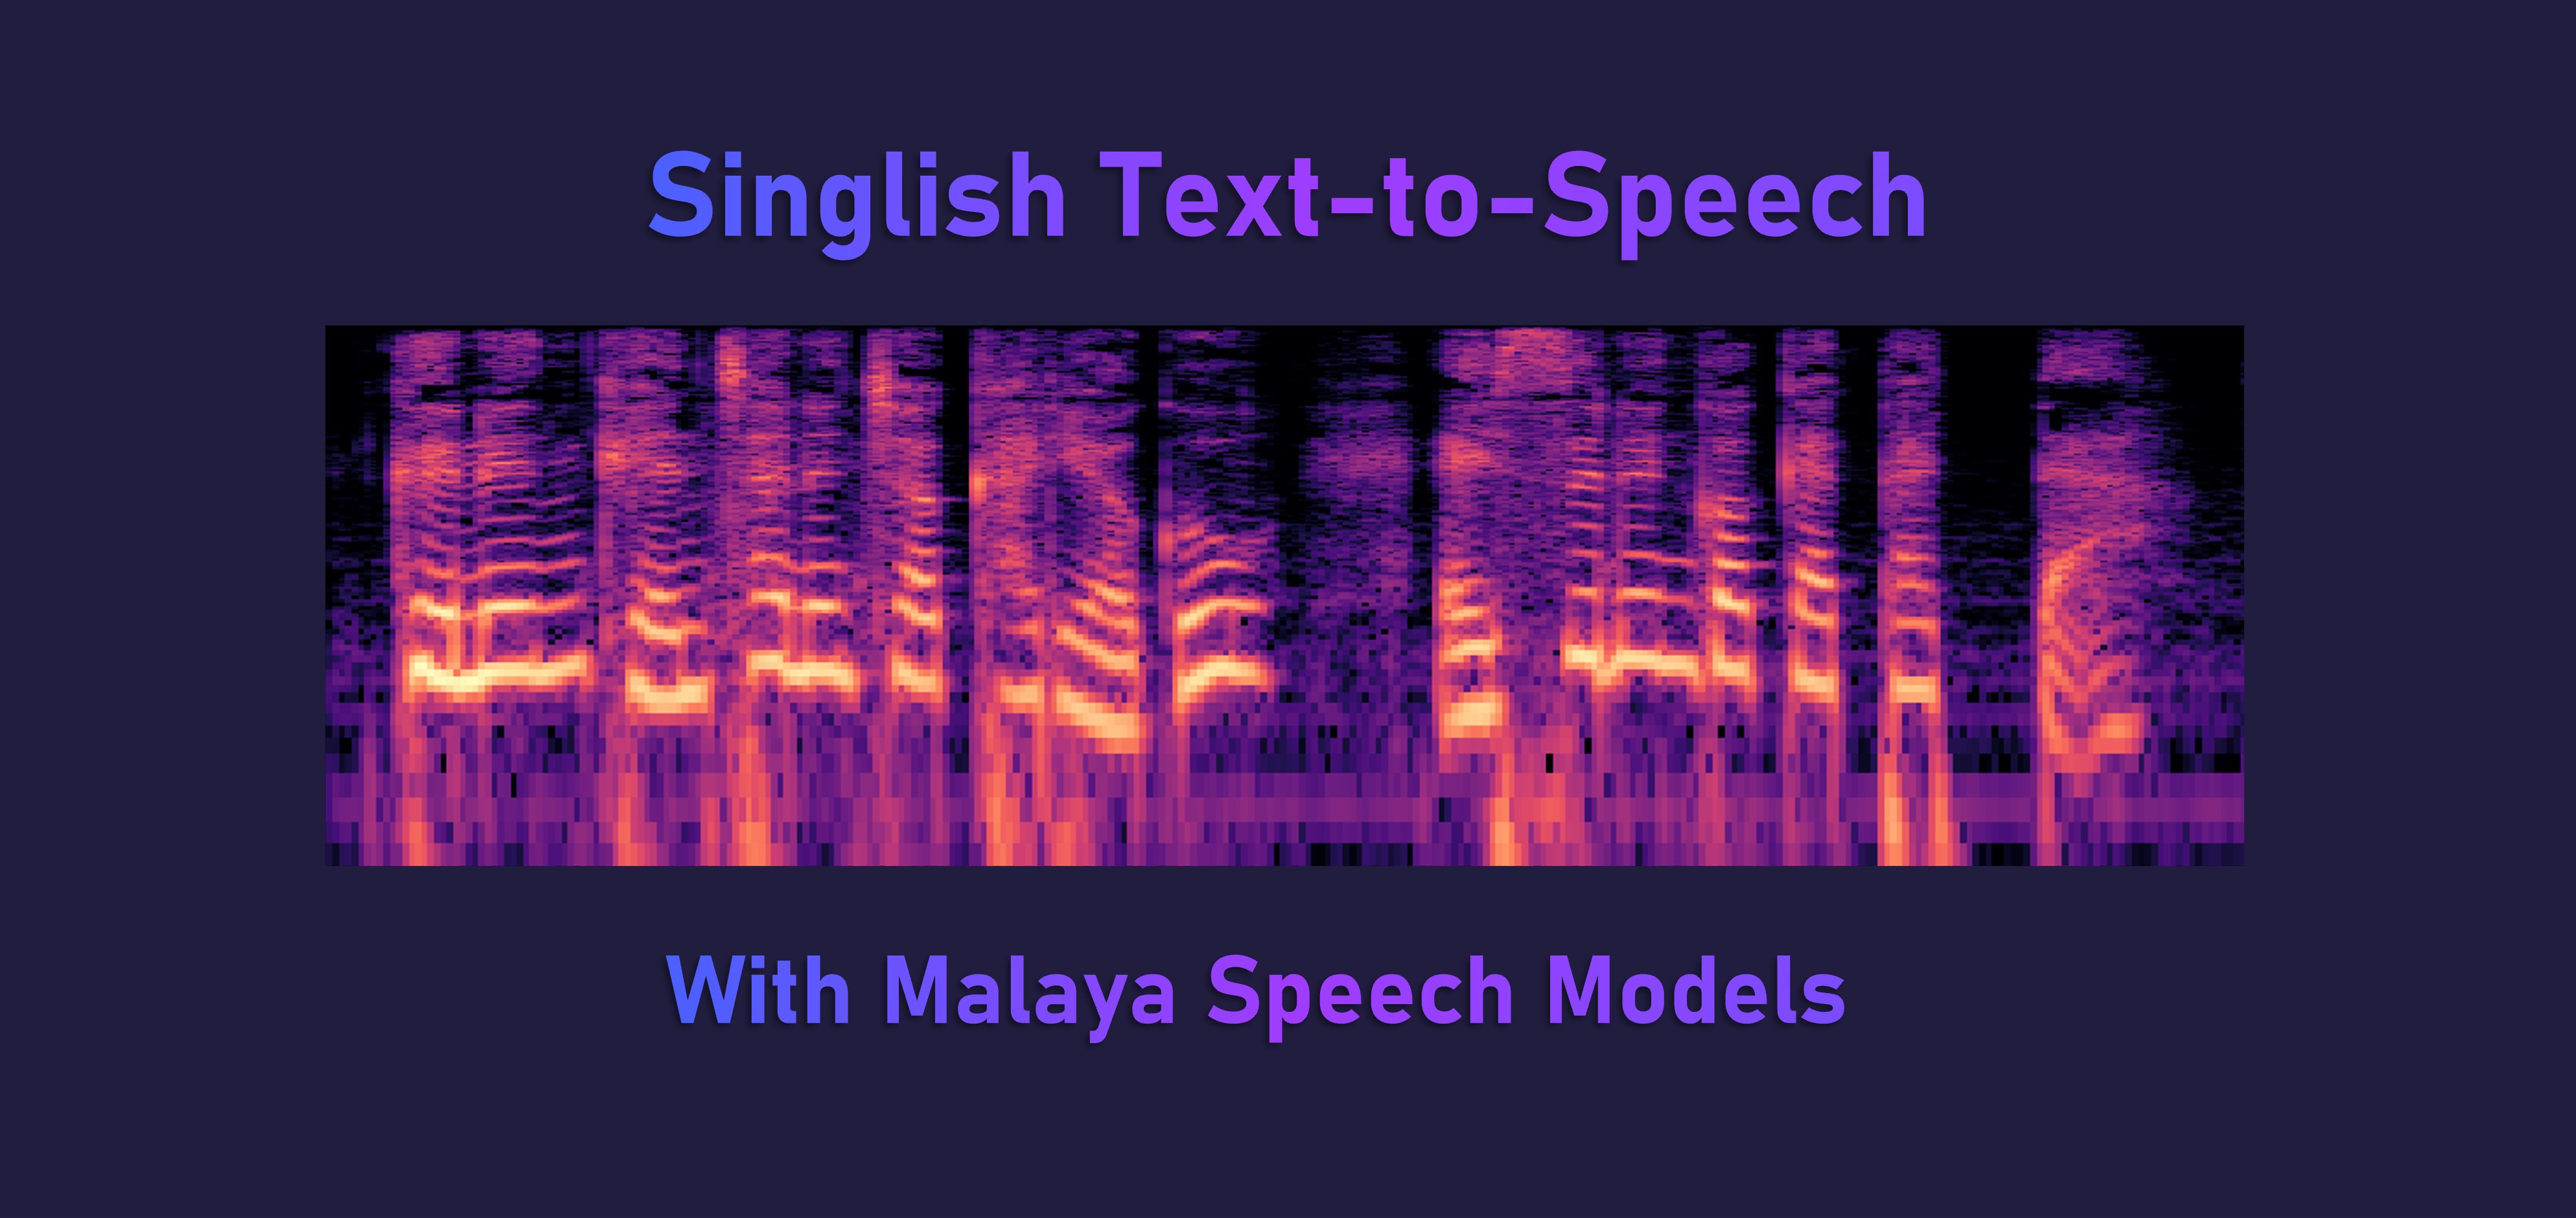 Singlish Text to Speech with Malaya Speech